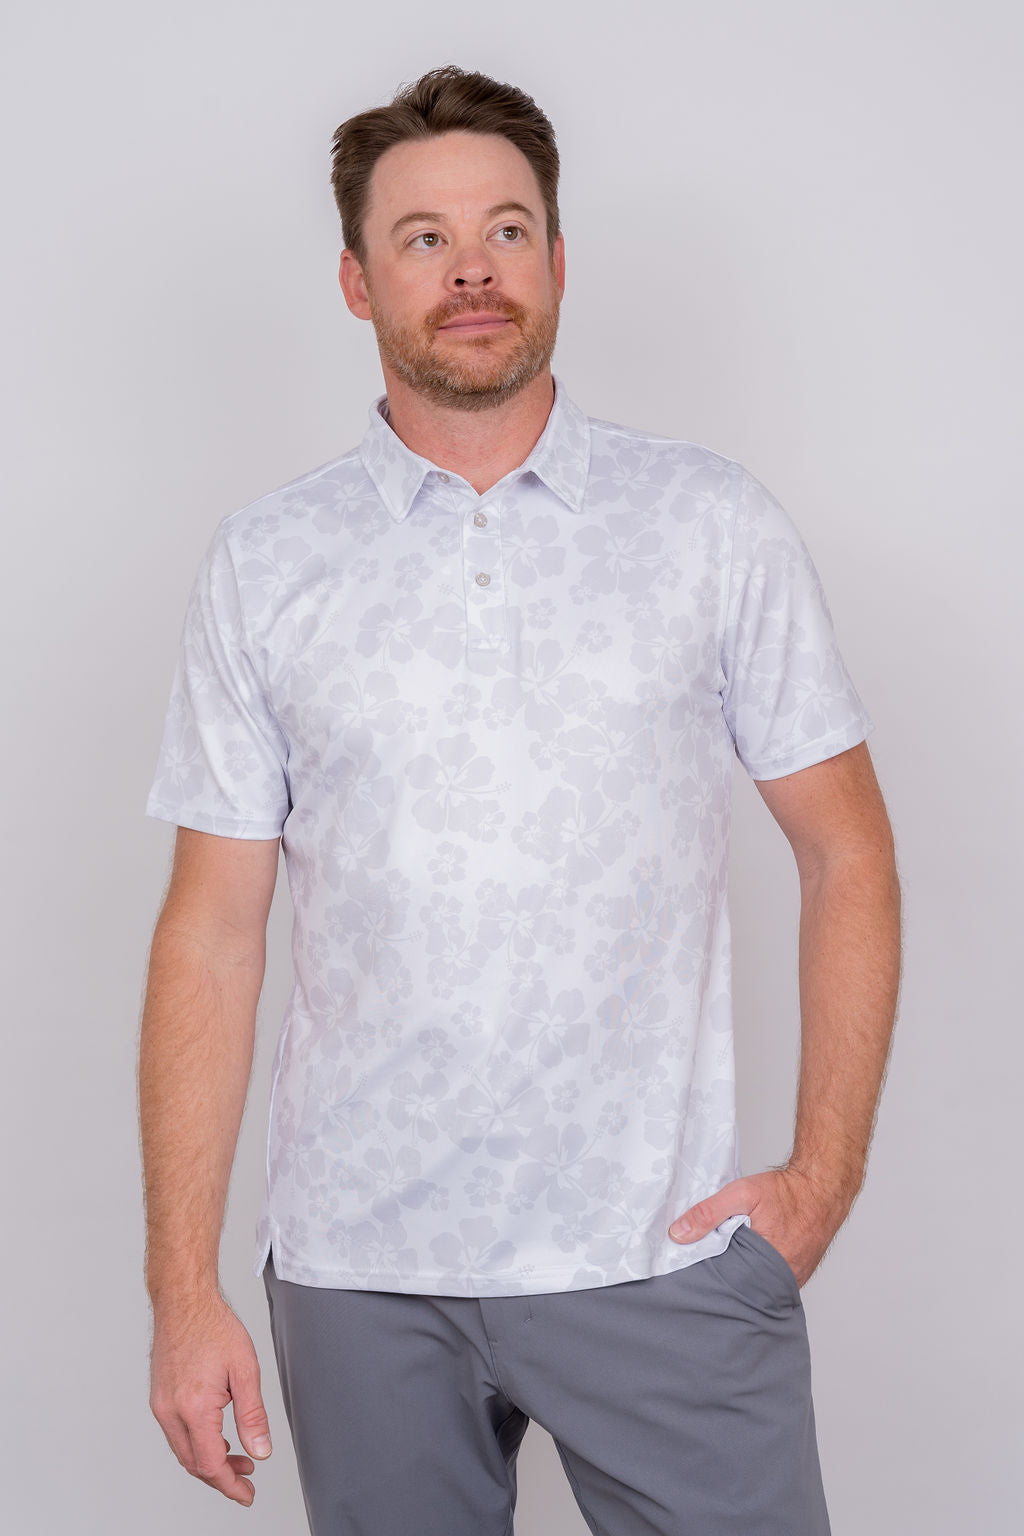 Player's Golf Shirt - White Ghost Hibiscus (Large, XL Only) Men's Golf Shirt Taylor Jordan Apparel 